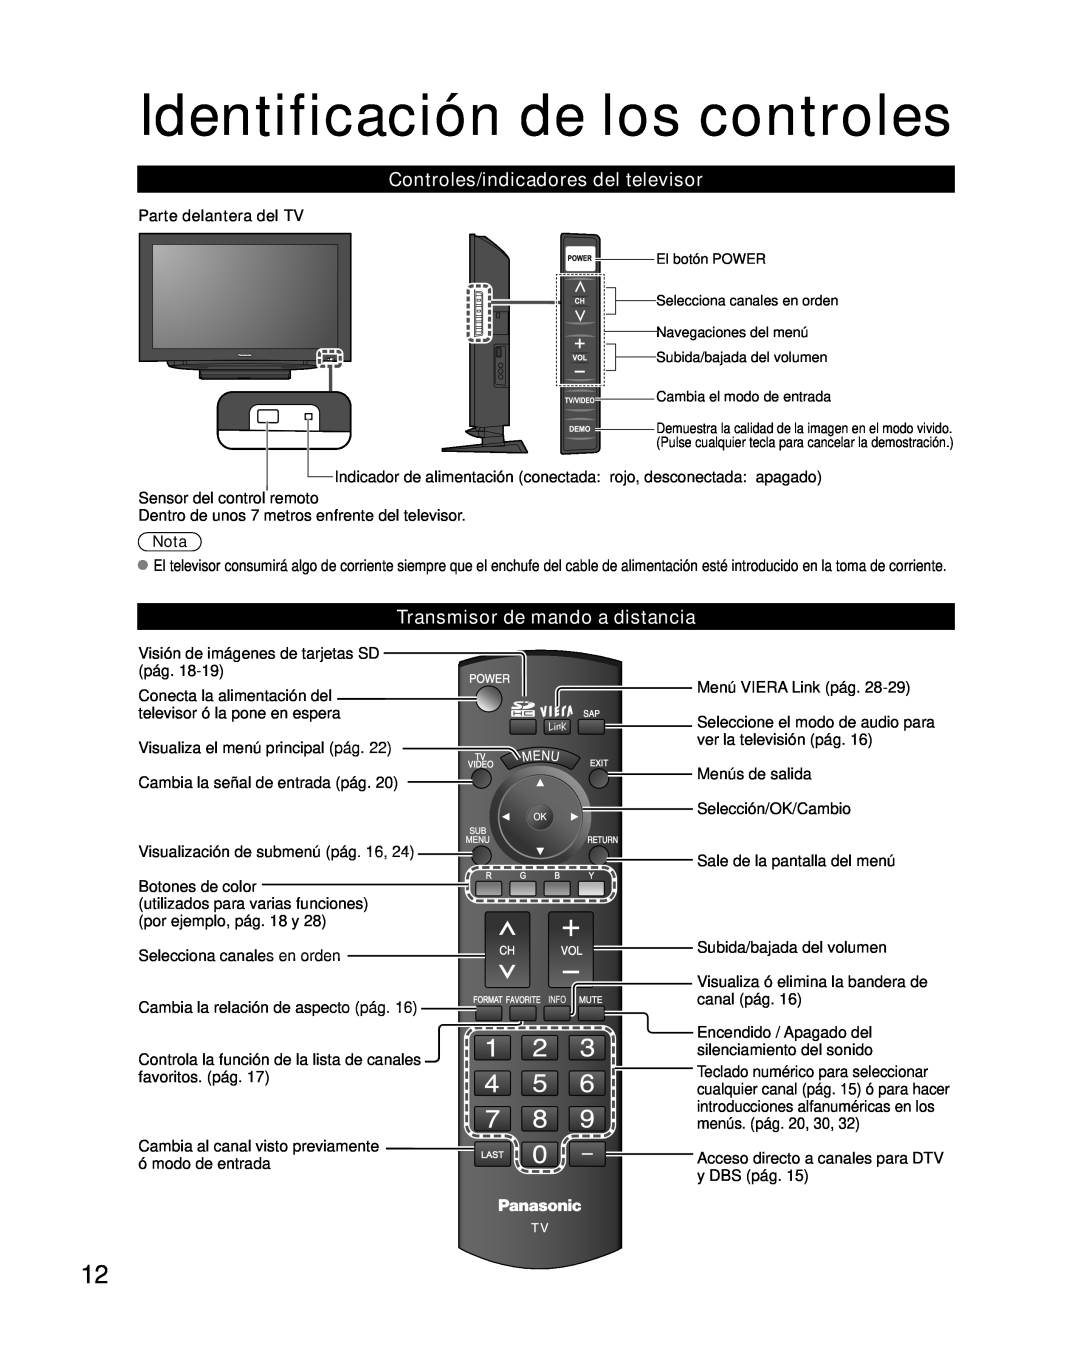 Panasonic TC-26LX85 Identificación de los controles, Controles/indicadores del televisor, Transmisor de mando a distancia 